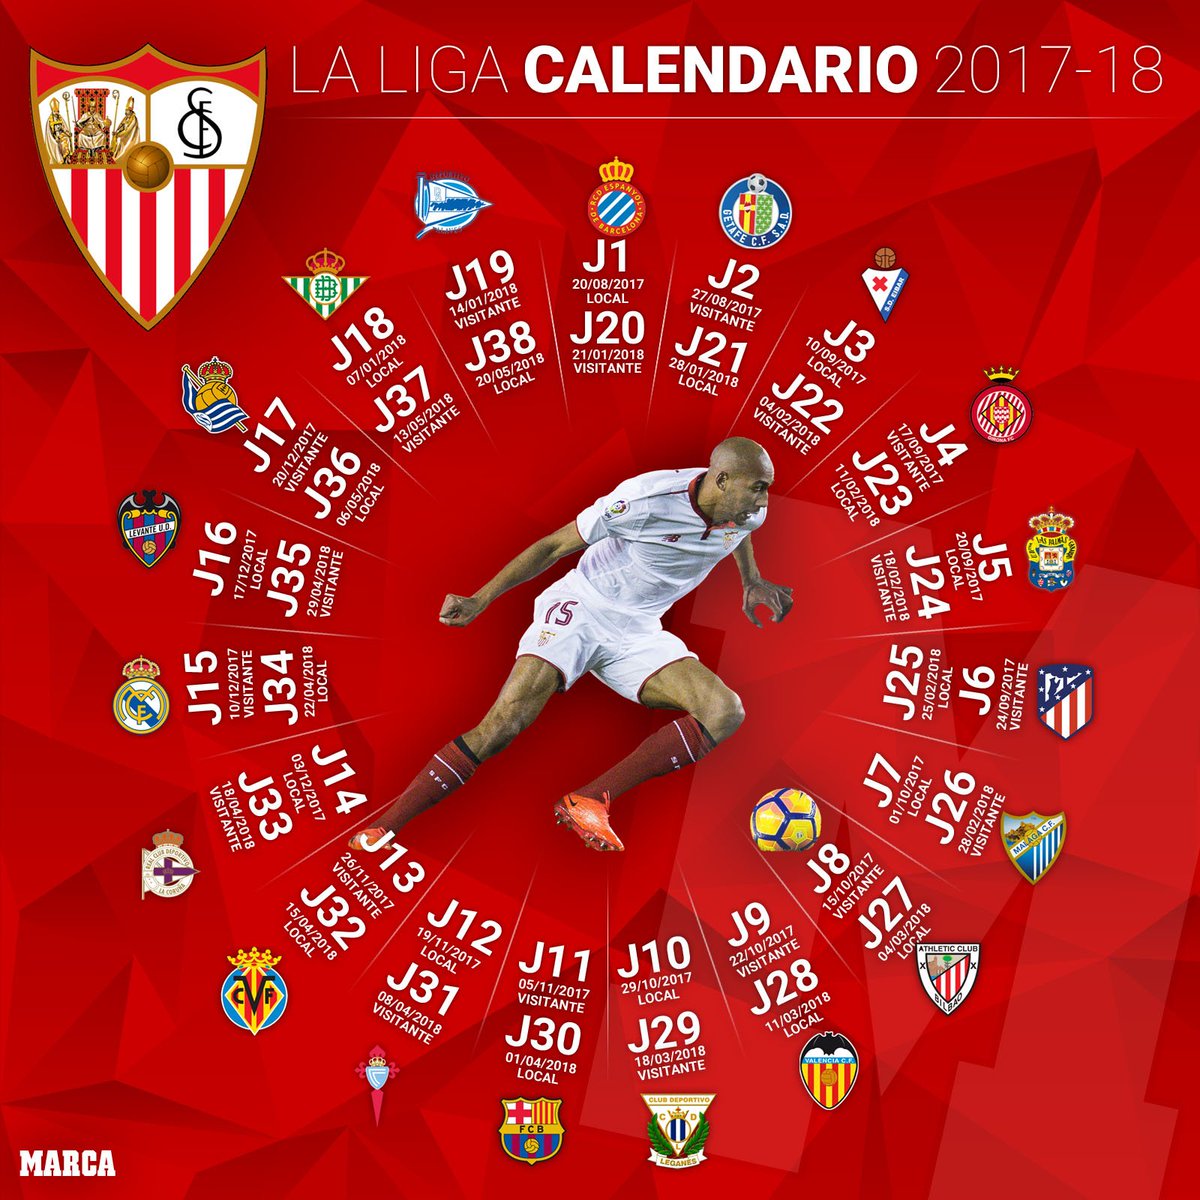 MARCA on Twitter: "📌 Seguimos con los calendarios de #LaLiga, el Sevilla 📆 https://t.co/Mbhm9cPsrw #SorteoCalendario https://t.co/cpiH4BgdW0" /